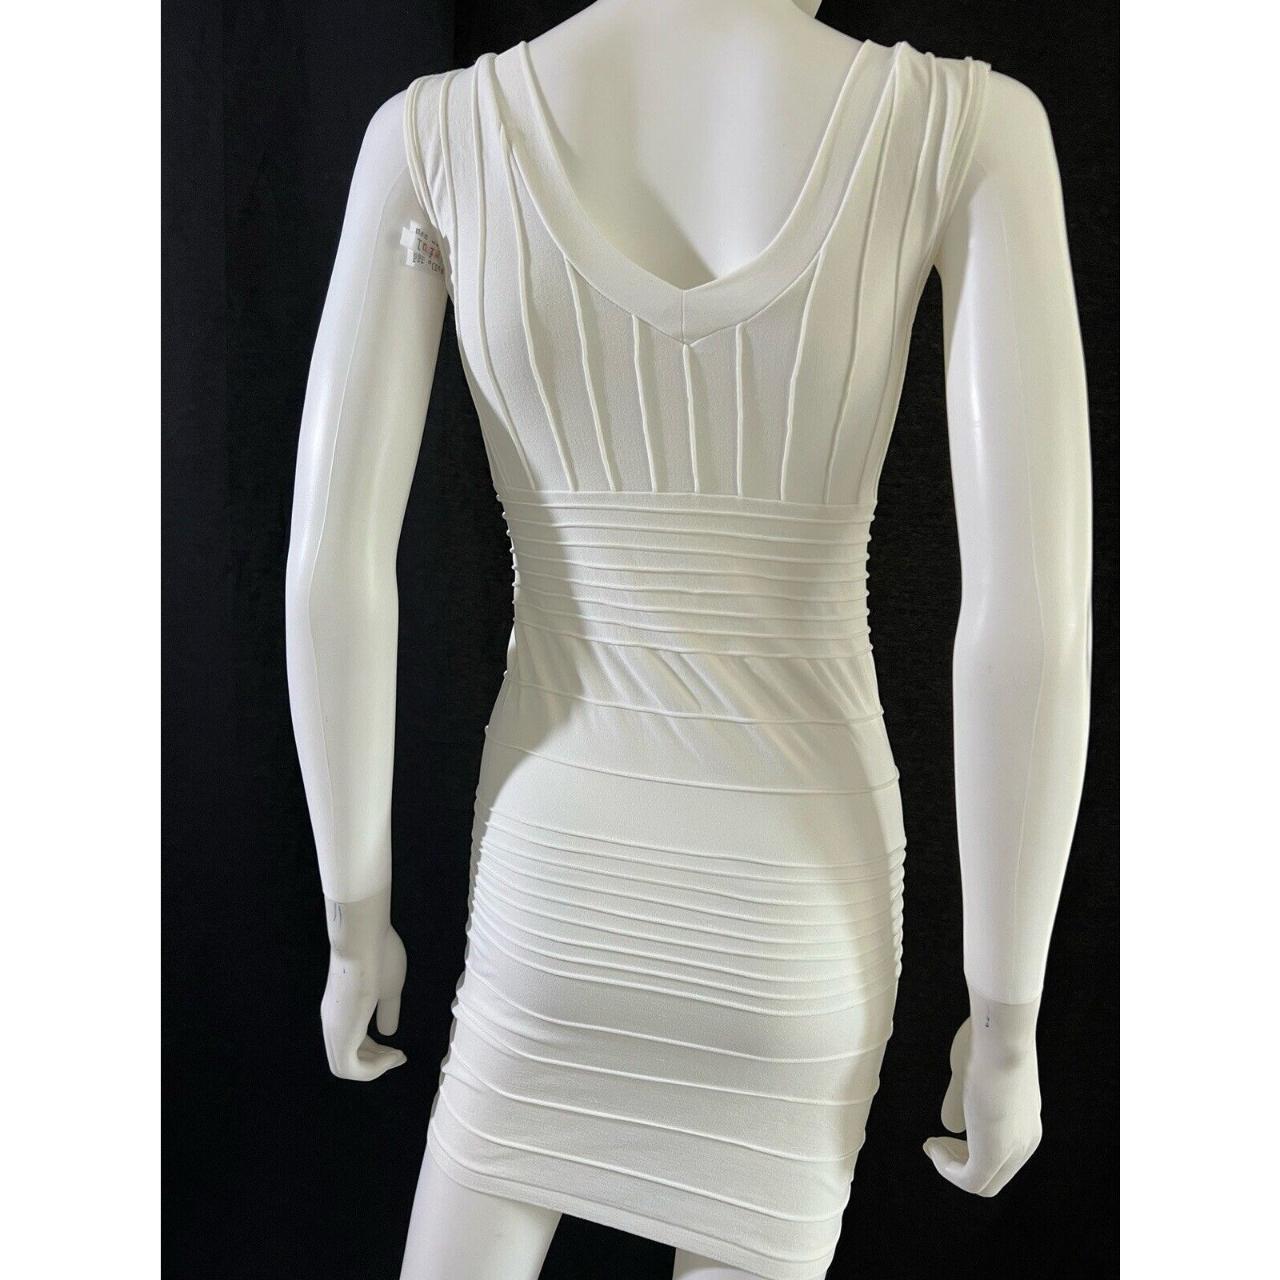 Colorful Standard Women's White Dress (2)